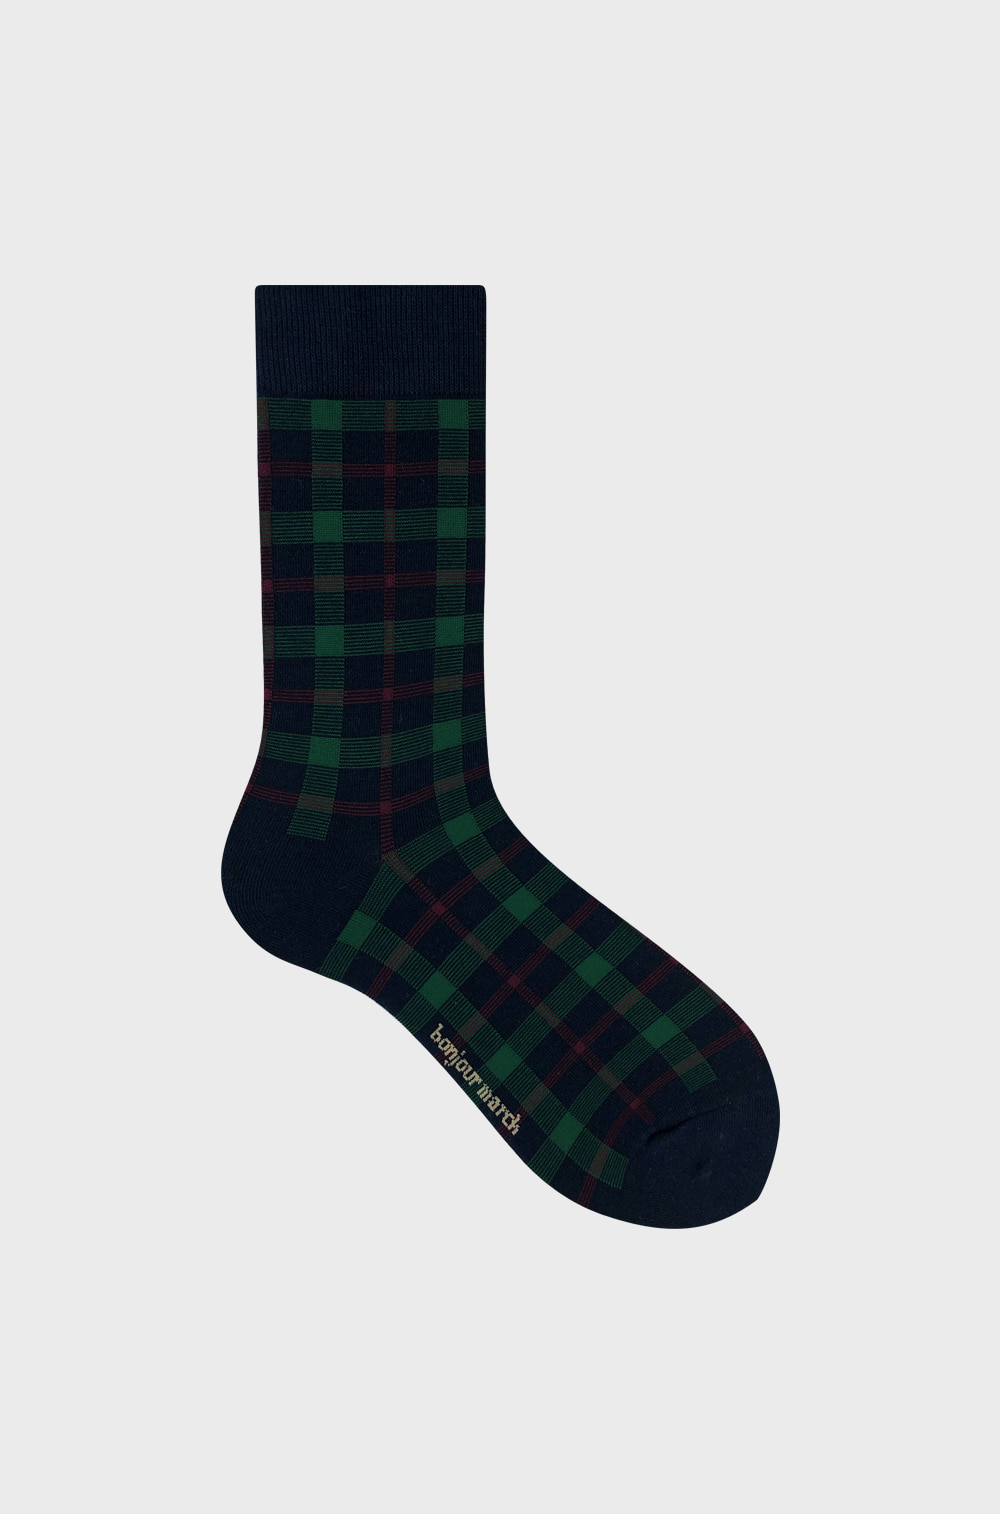 Scottish socks Ver.2